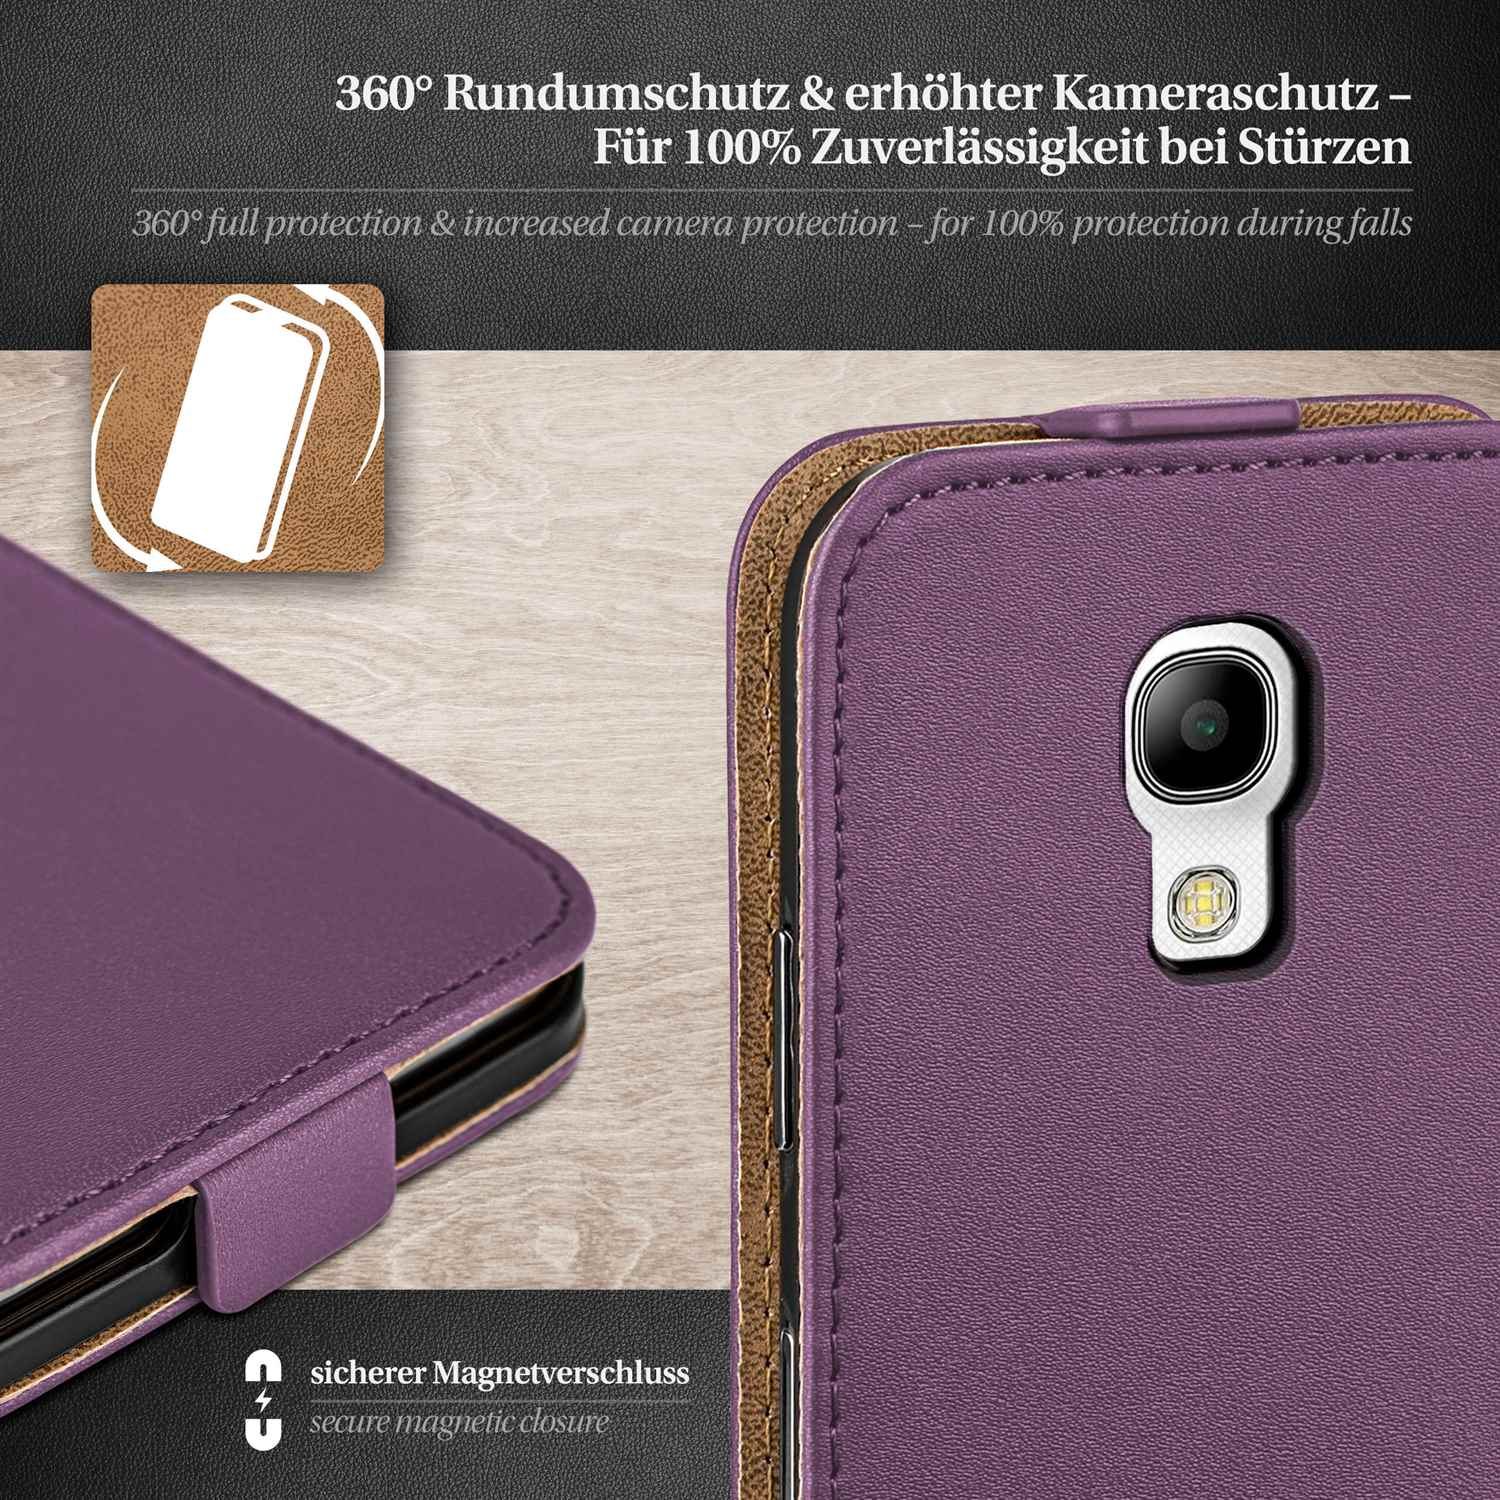 Case, Indigo-Violet Galaxy MOEX Flip Cover, Samsung, S4, Flip